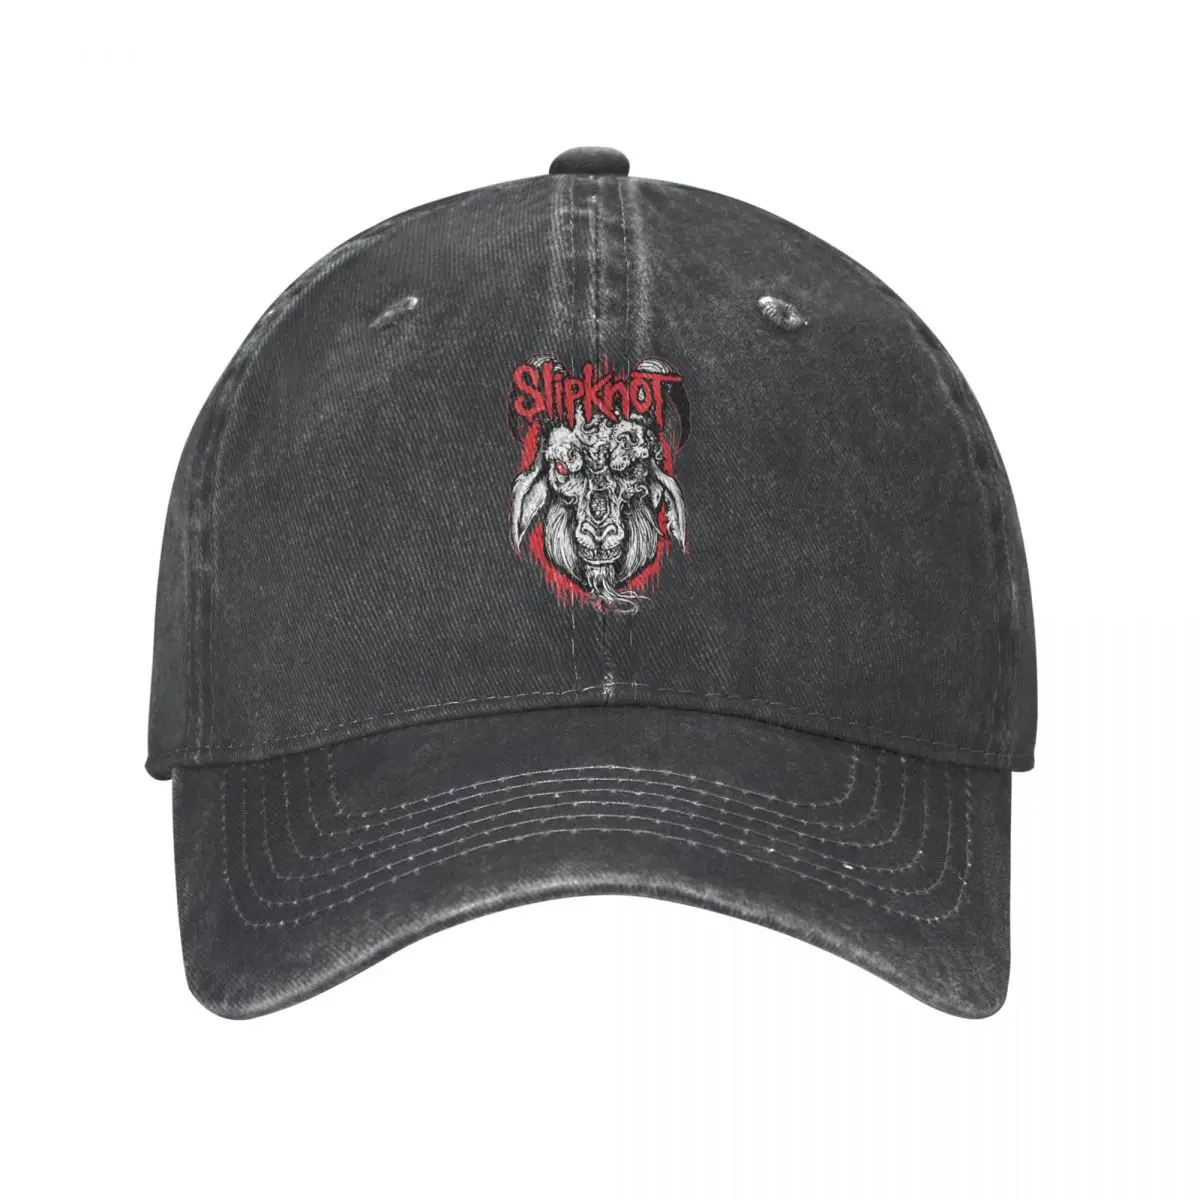 

Vintage S-Slipknots Rock Heavy Mental Baseball Cap Unisex Distressed Washed Snapback Cap Outdoor Summer Adjustable Fit Caps Hat